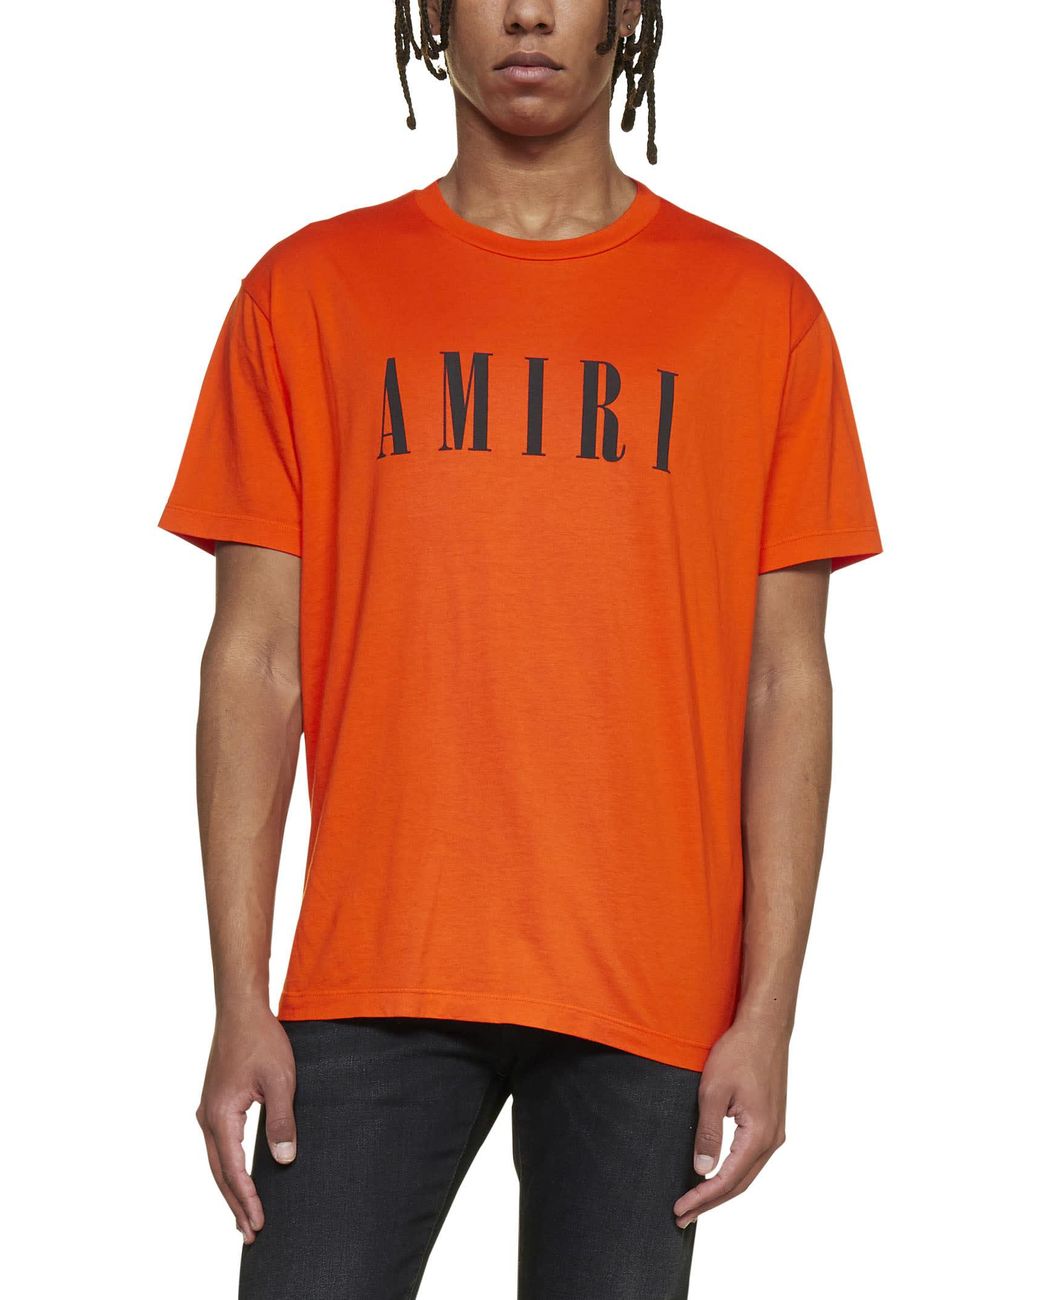 AMIRI T shirt how to spot fake. Real vs Fake Amiri shirt 